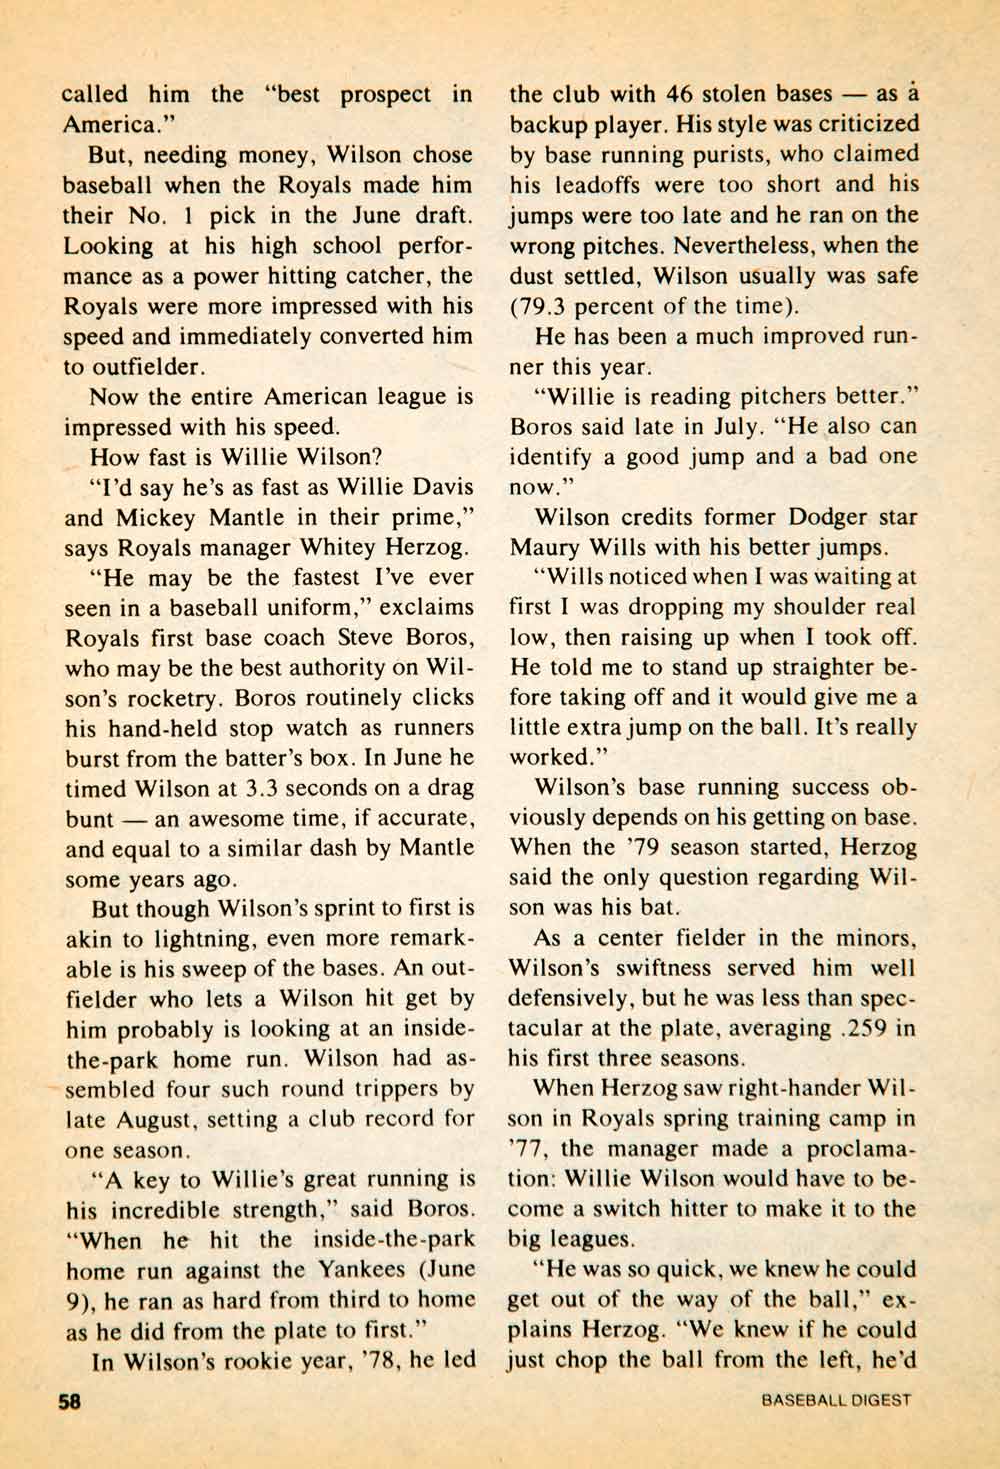 1979 Article MLB Baseball Sports Memorabilia Willie Wilson Kansas City YBD1